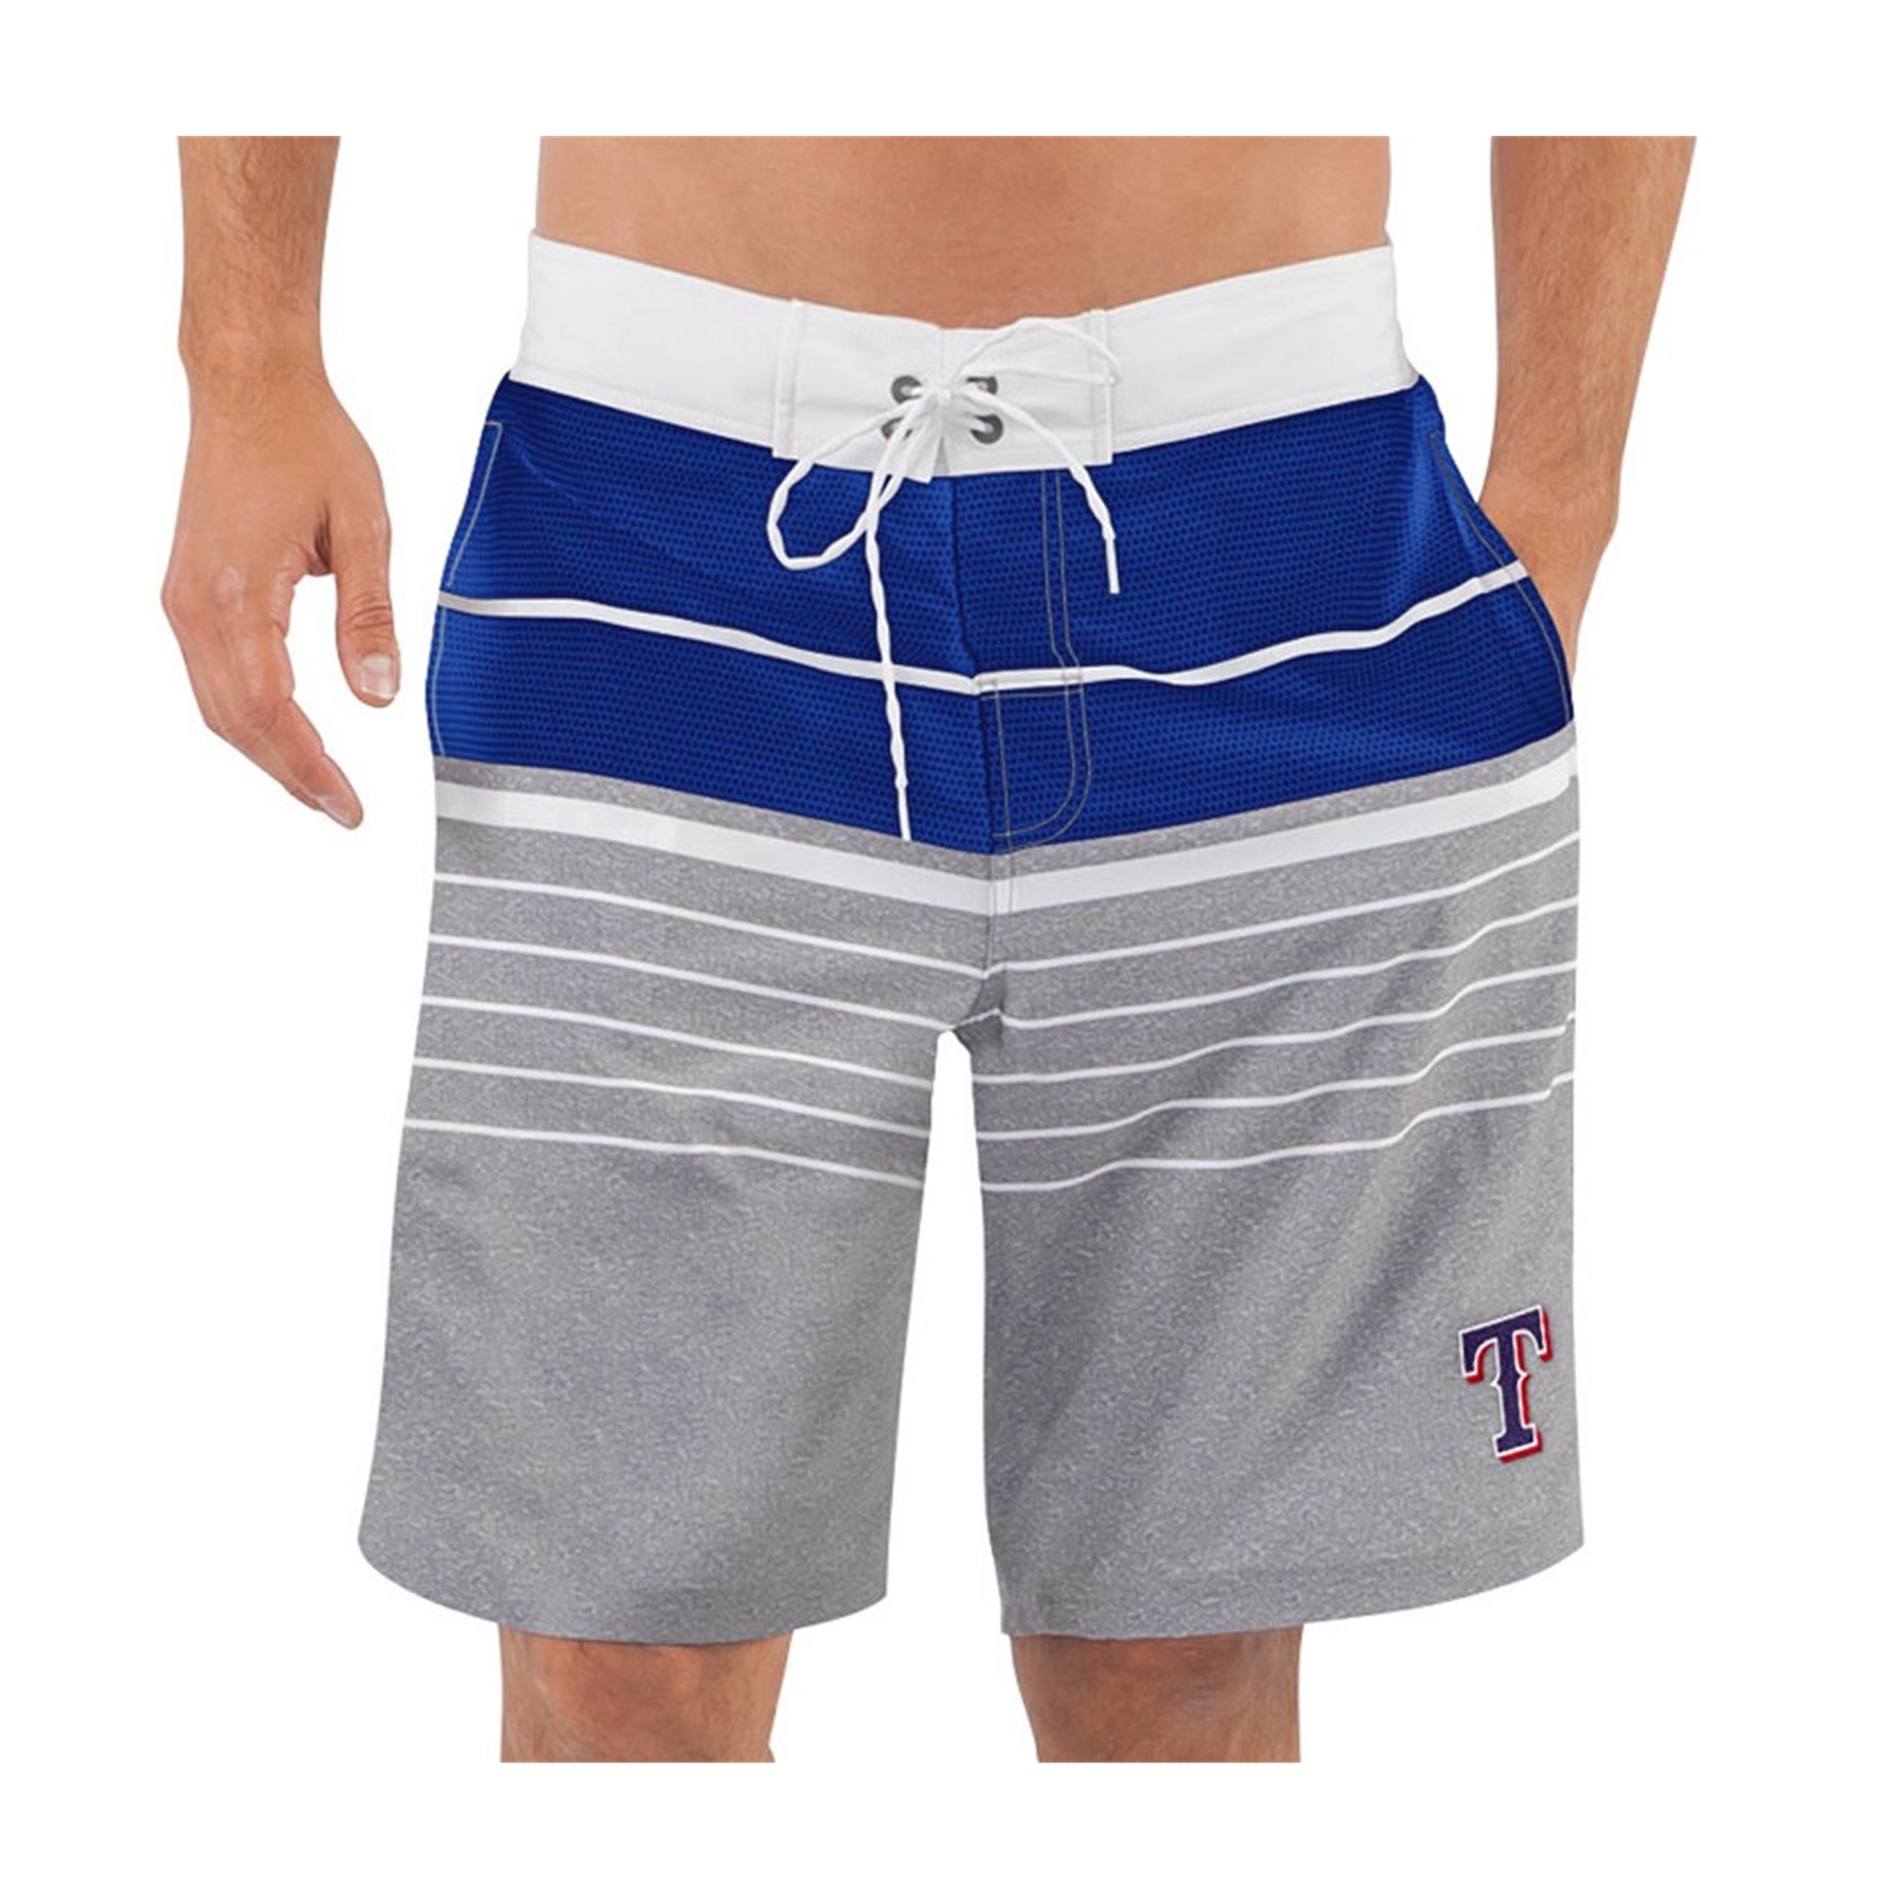 G-Iii Sports Mens Texas Rangers Lace-Up Swim Bottom Trunks